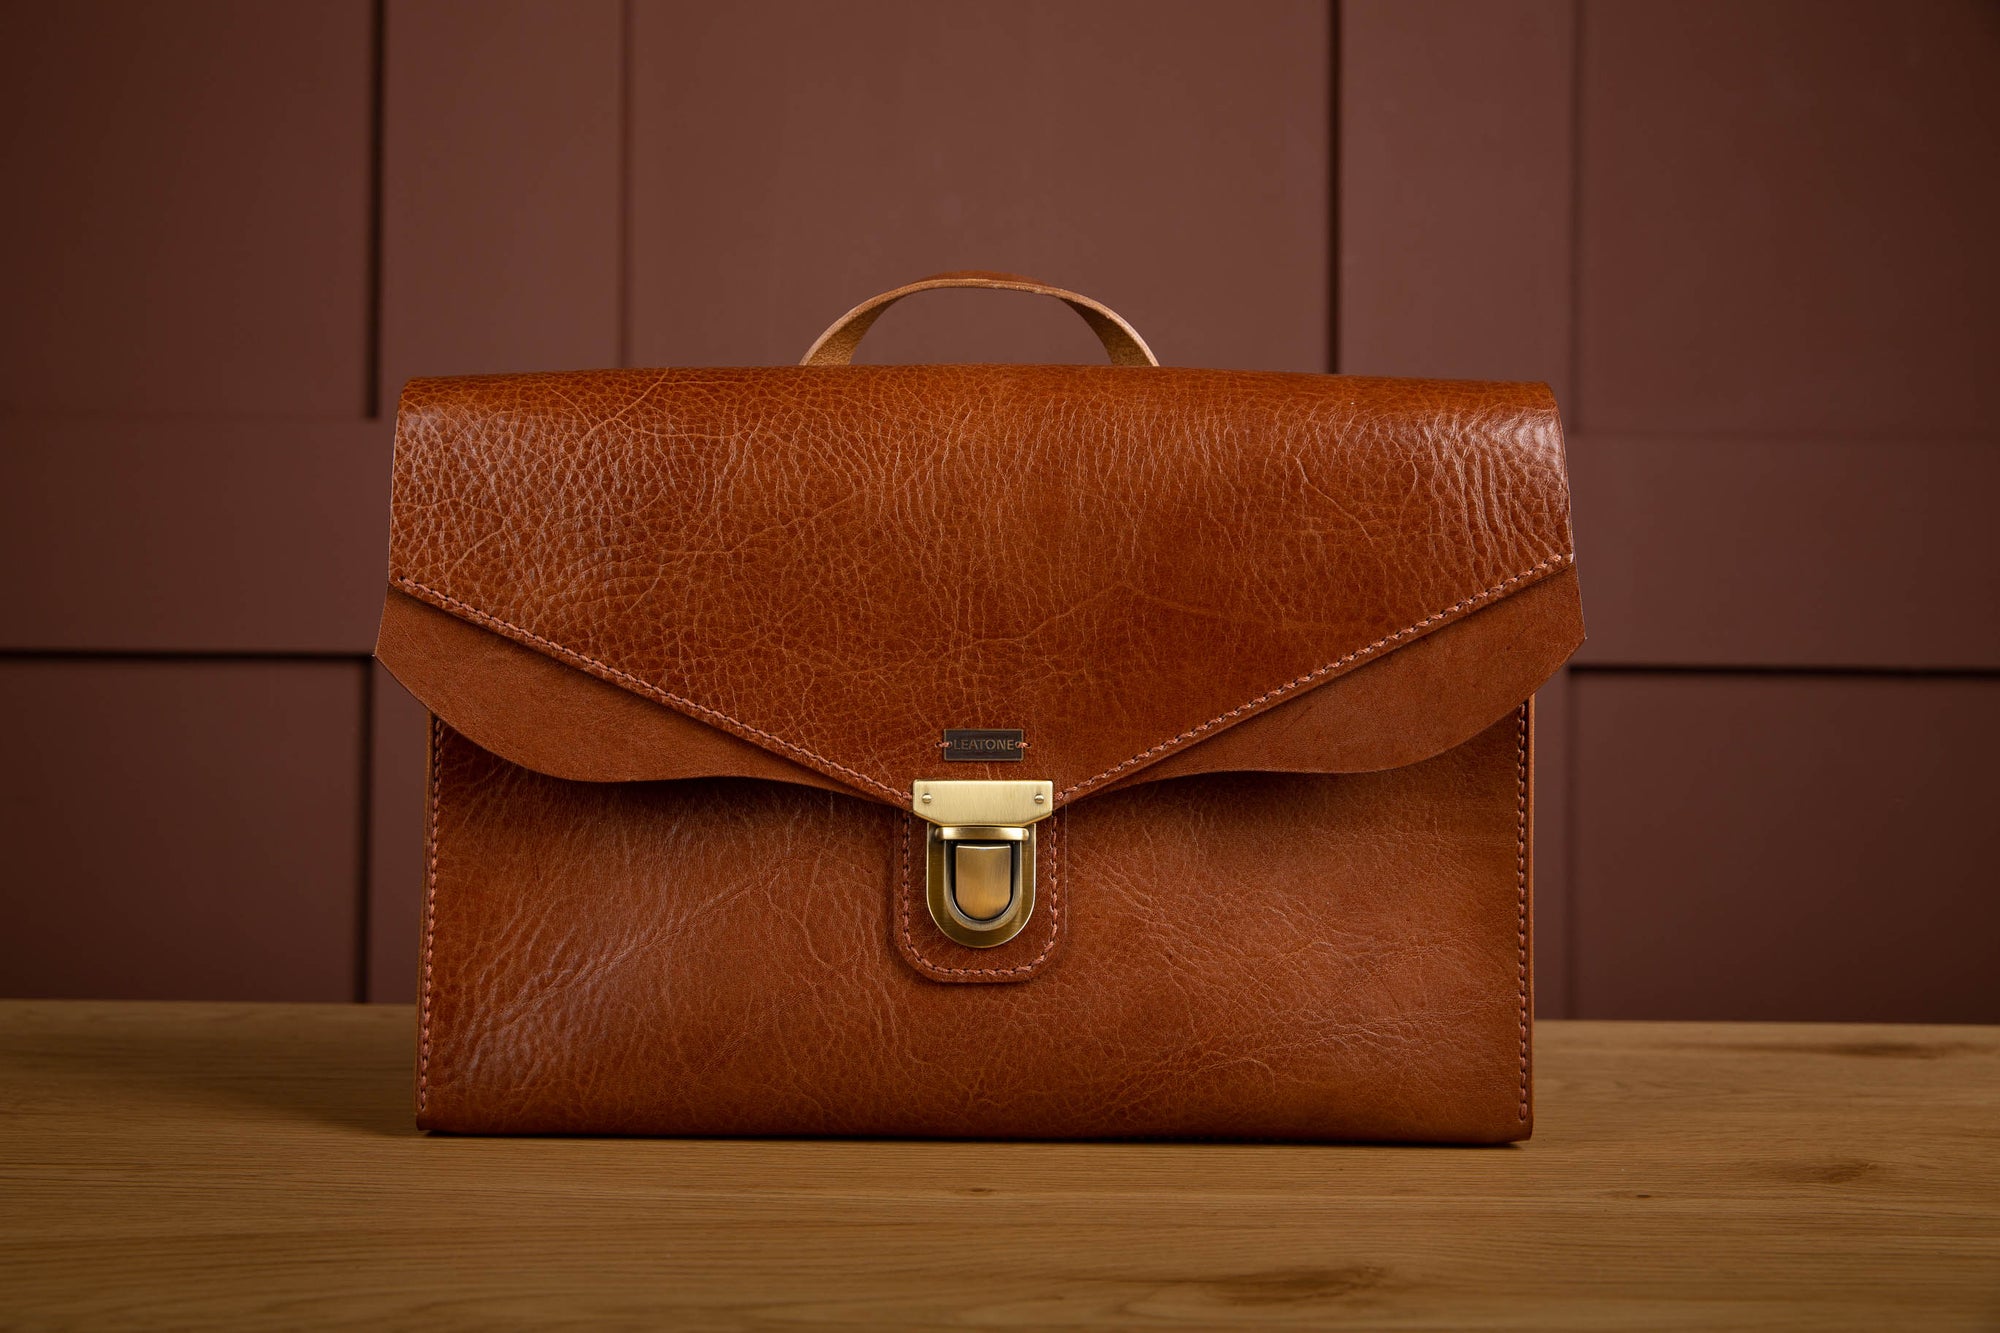 LEATONE "Retrato" leather briefcase in classic whiskey color